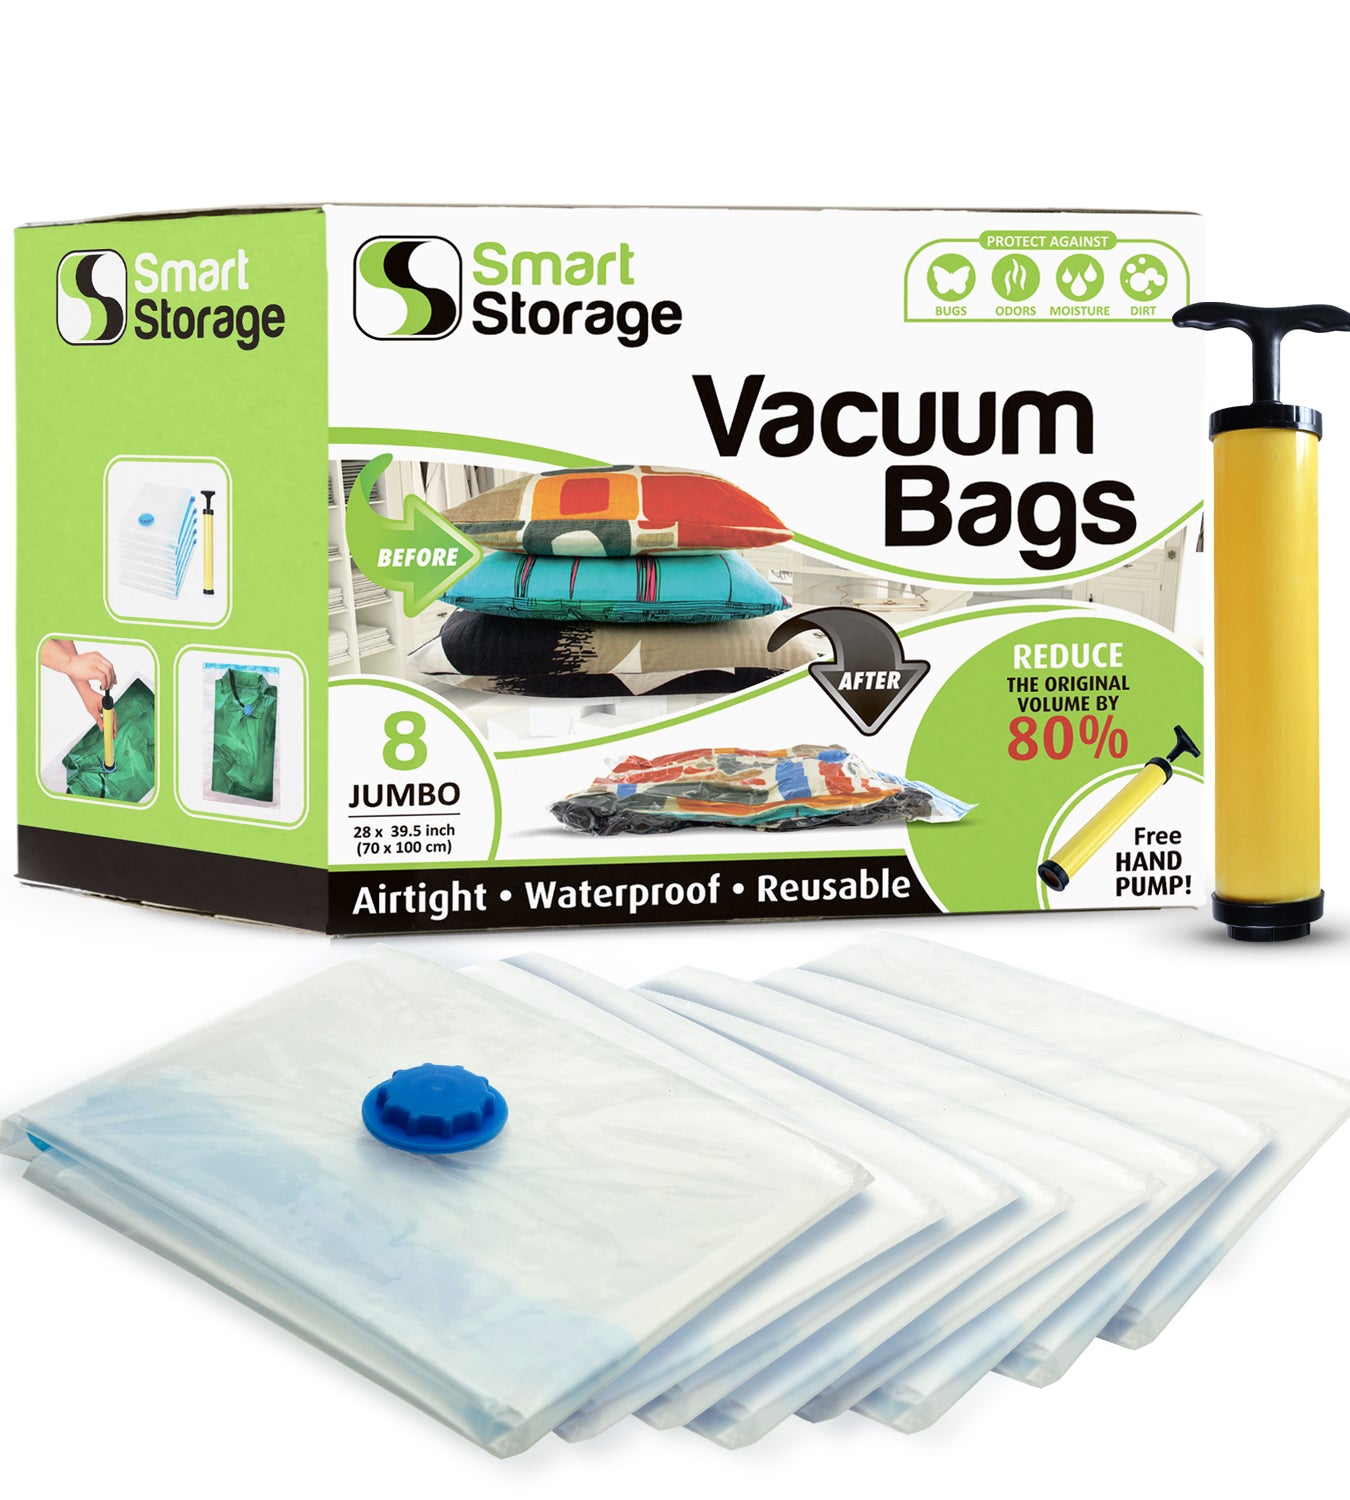 Spacesaver's Space Saver Vacuum Storage Bags Save 80% Space